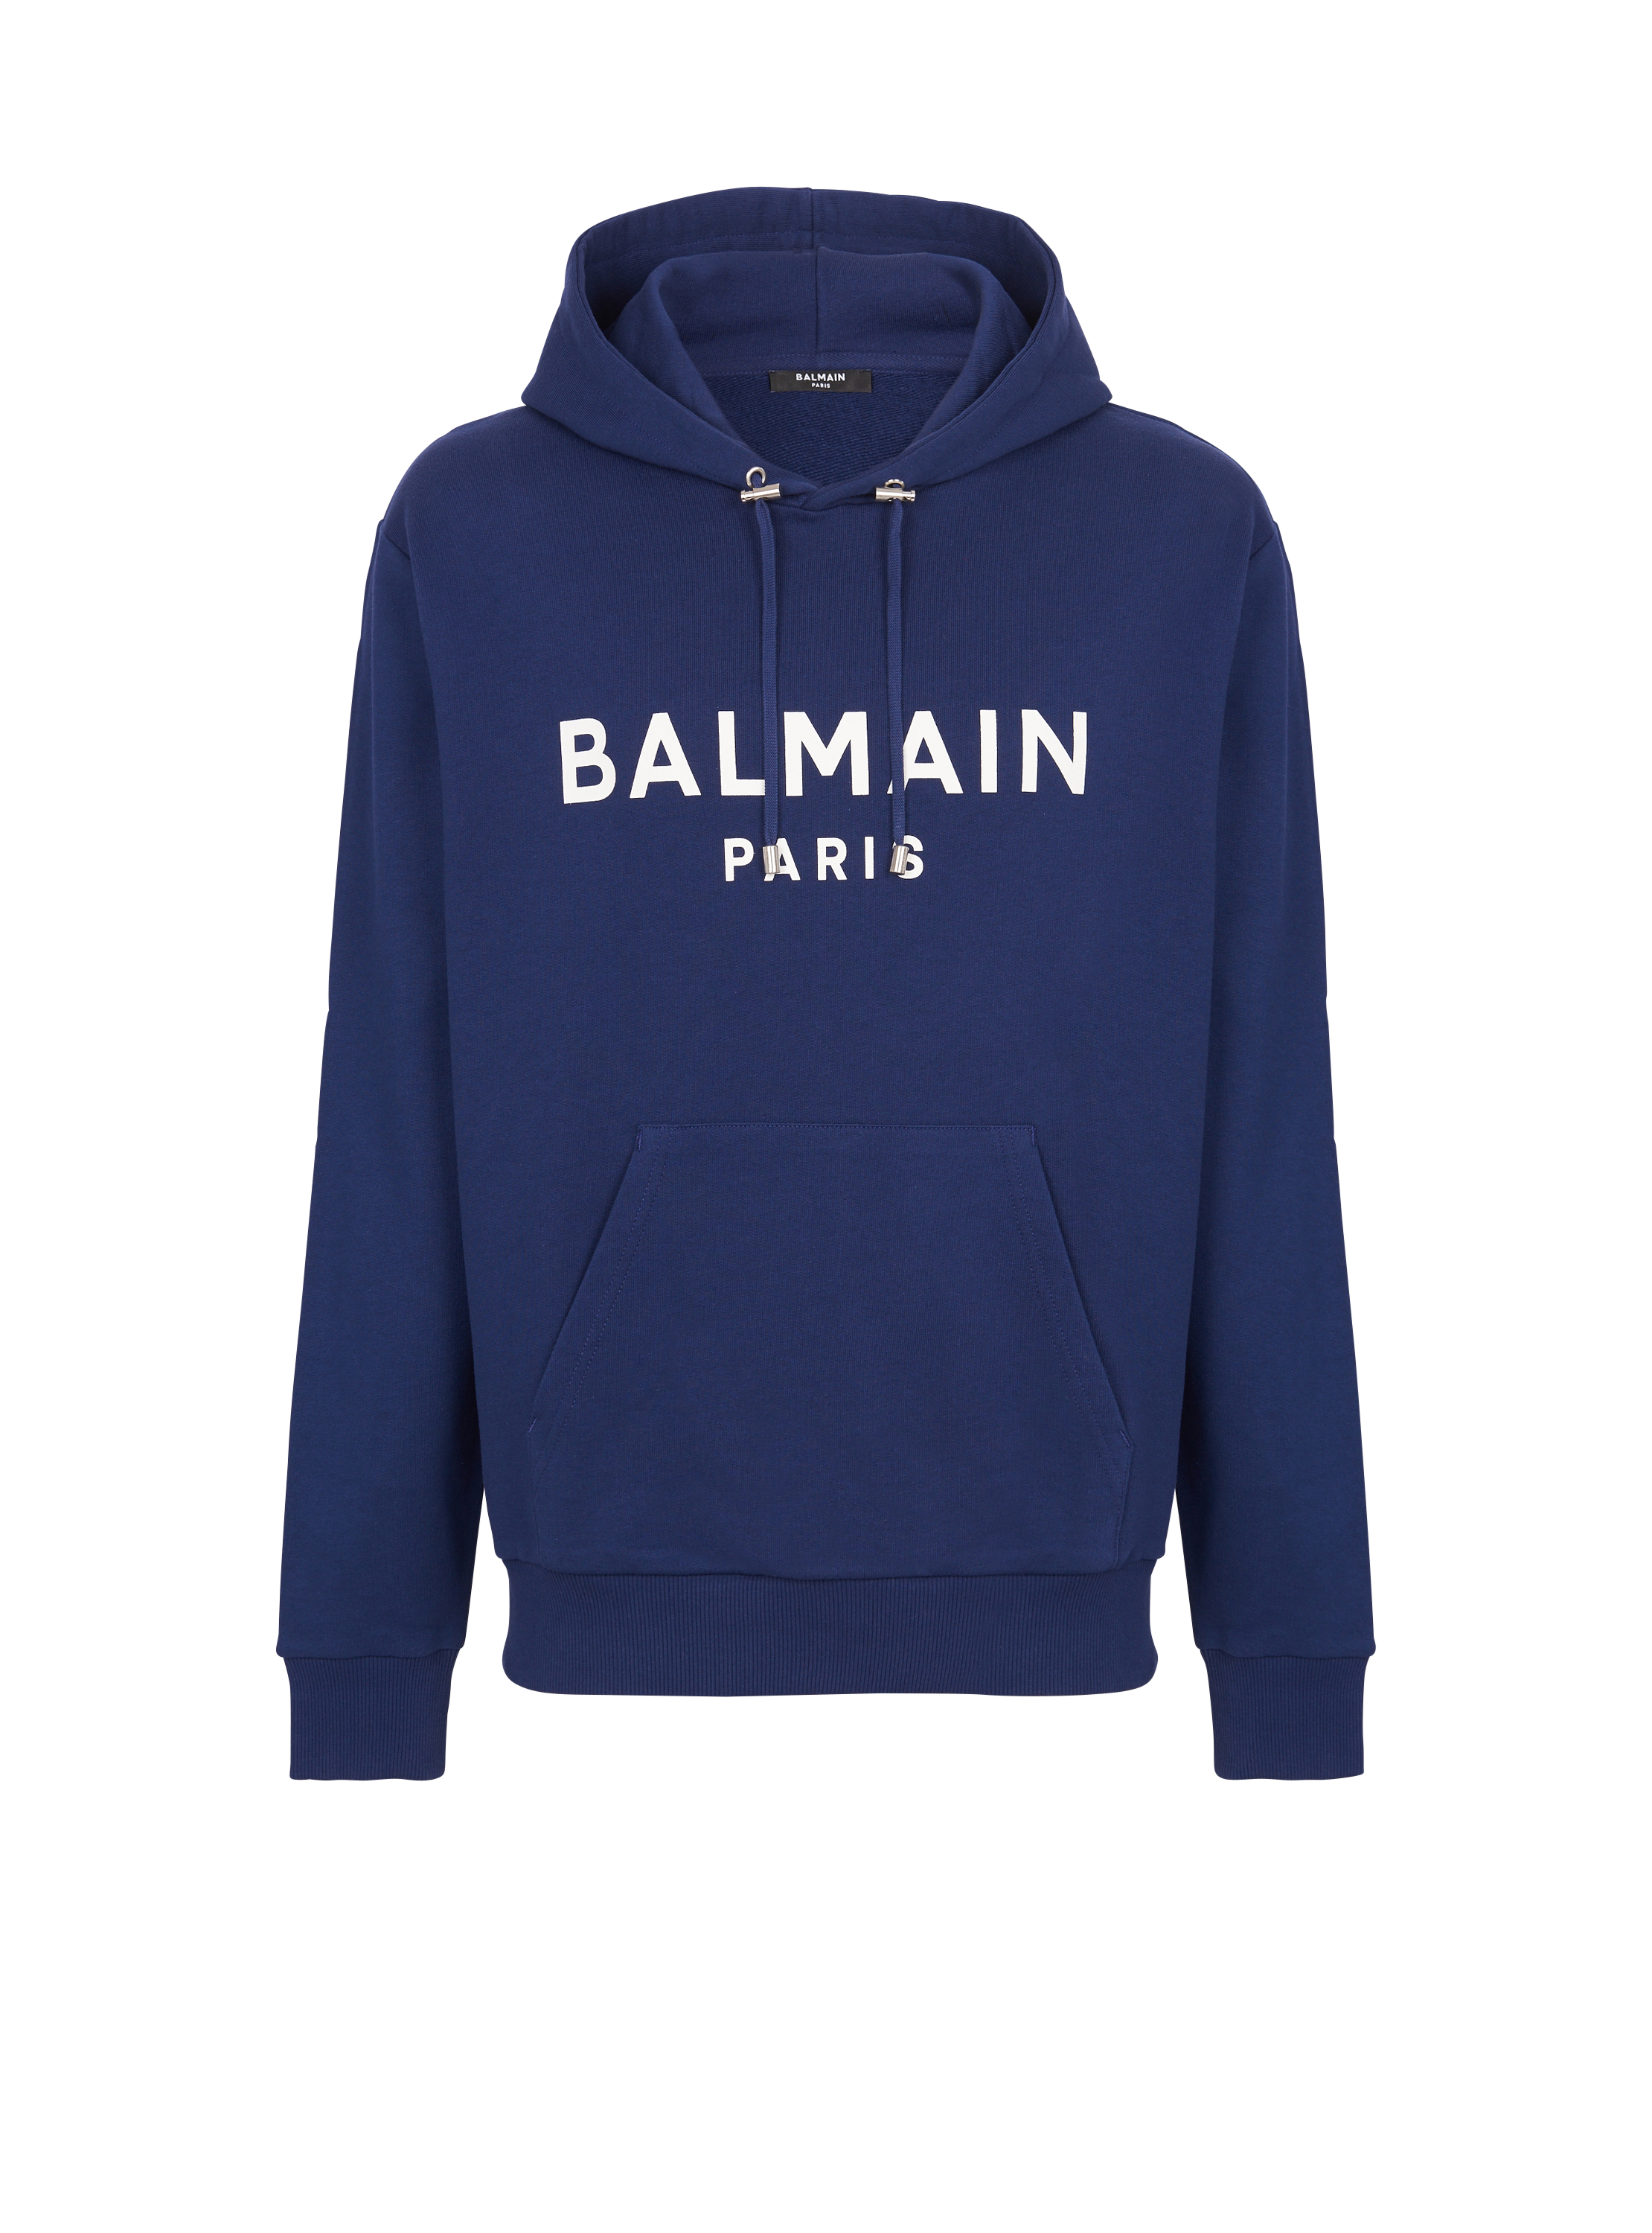 Sweat-shirt à capuche Balmain Paris, bleu marine, hi-res